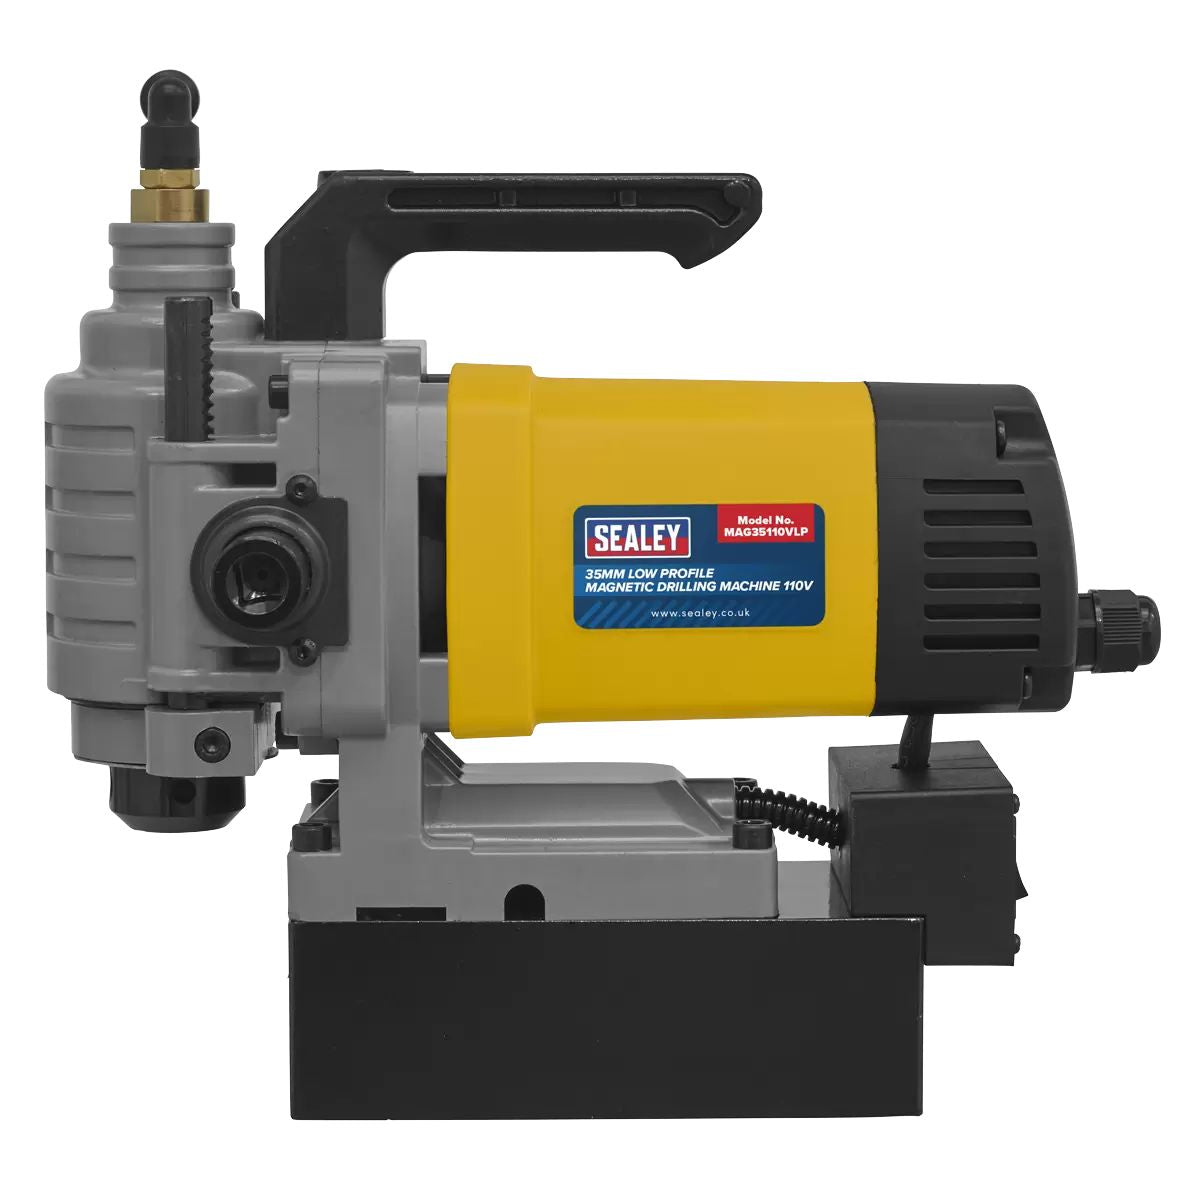 Sealey MAG35110VLP 35mm Low Profile Magnetic Drilling Machine 110V